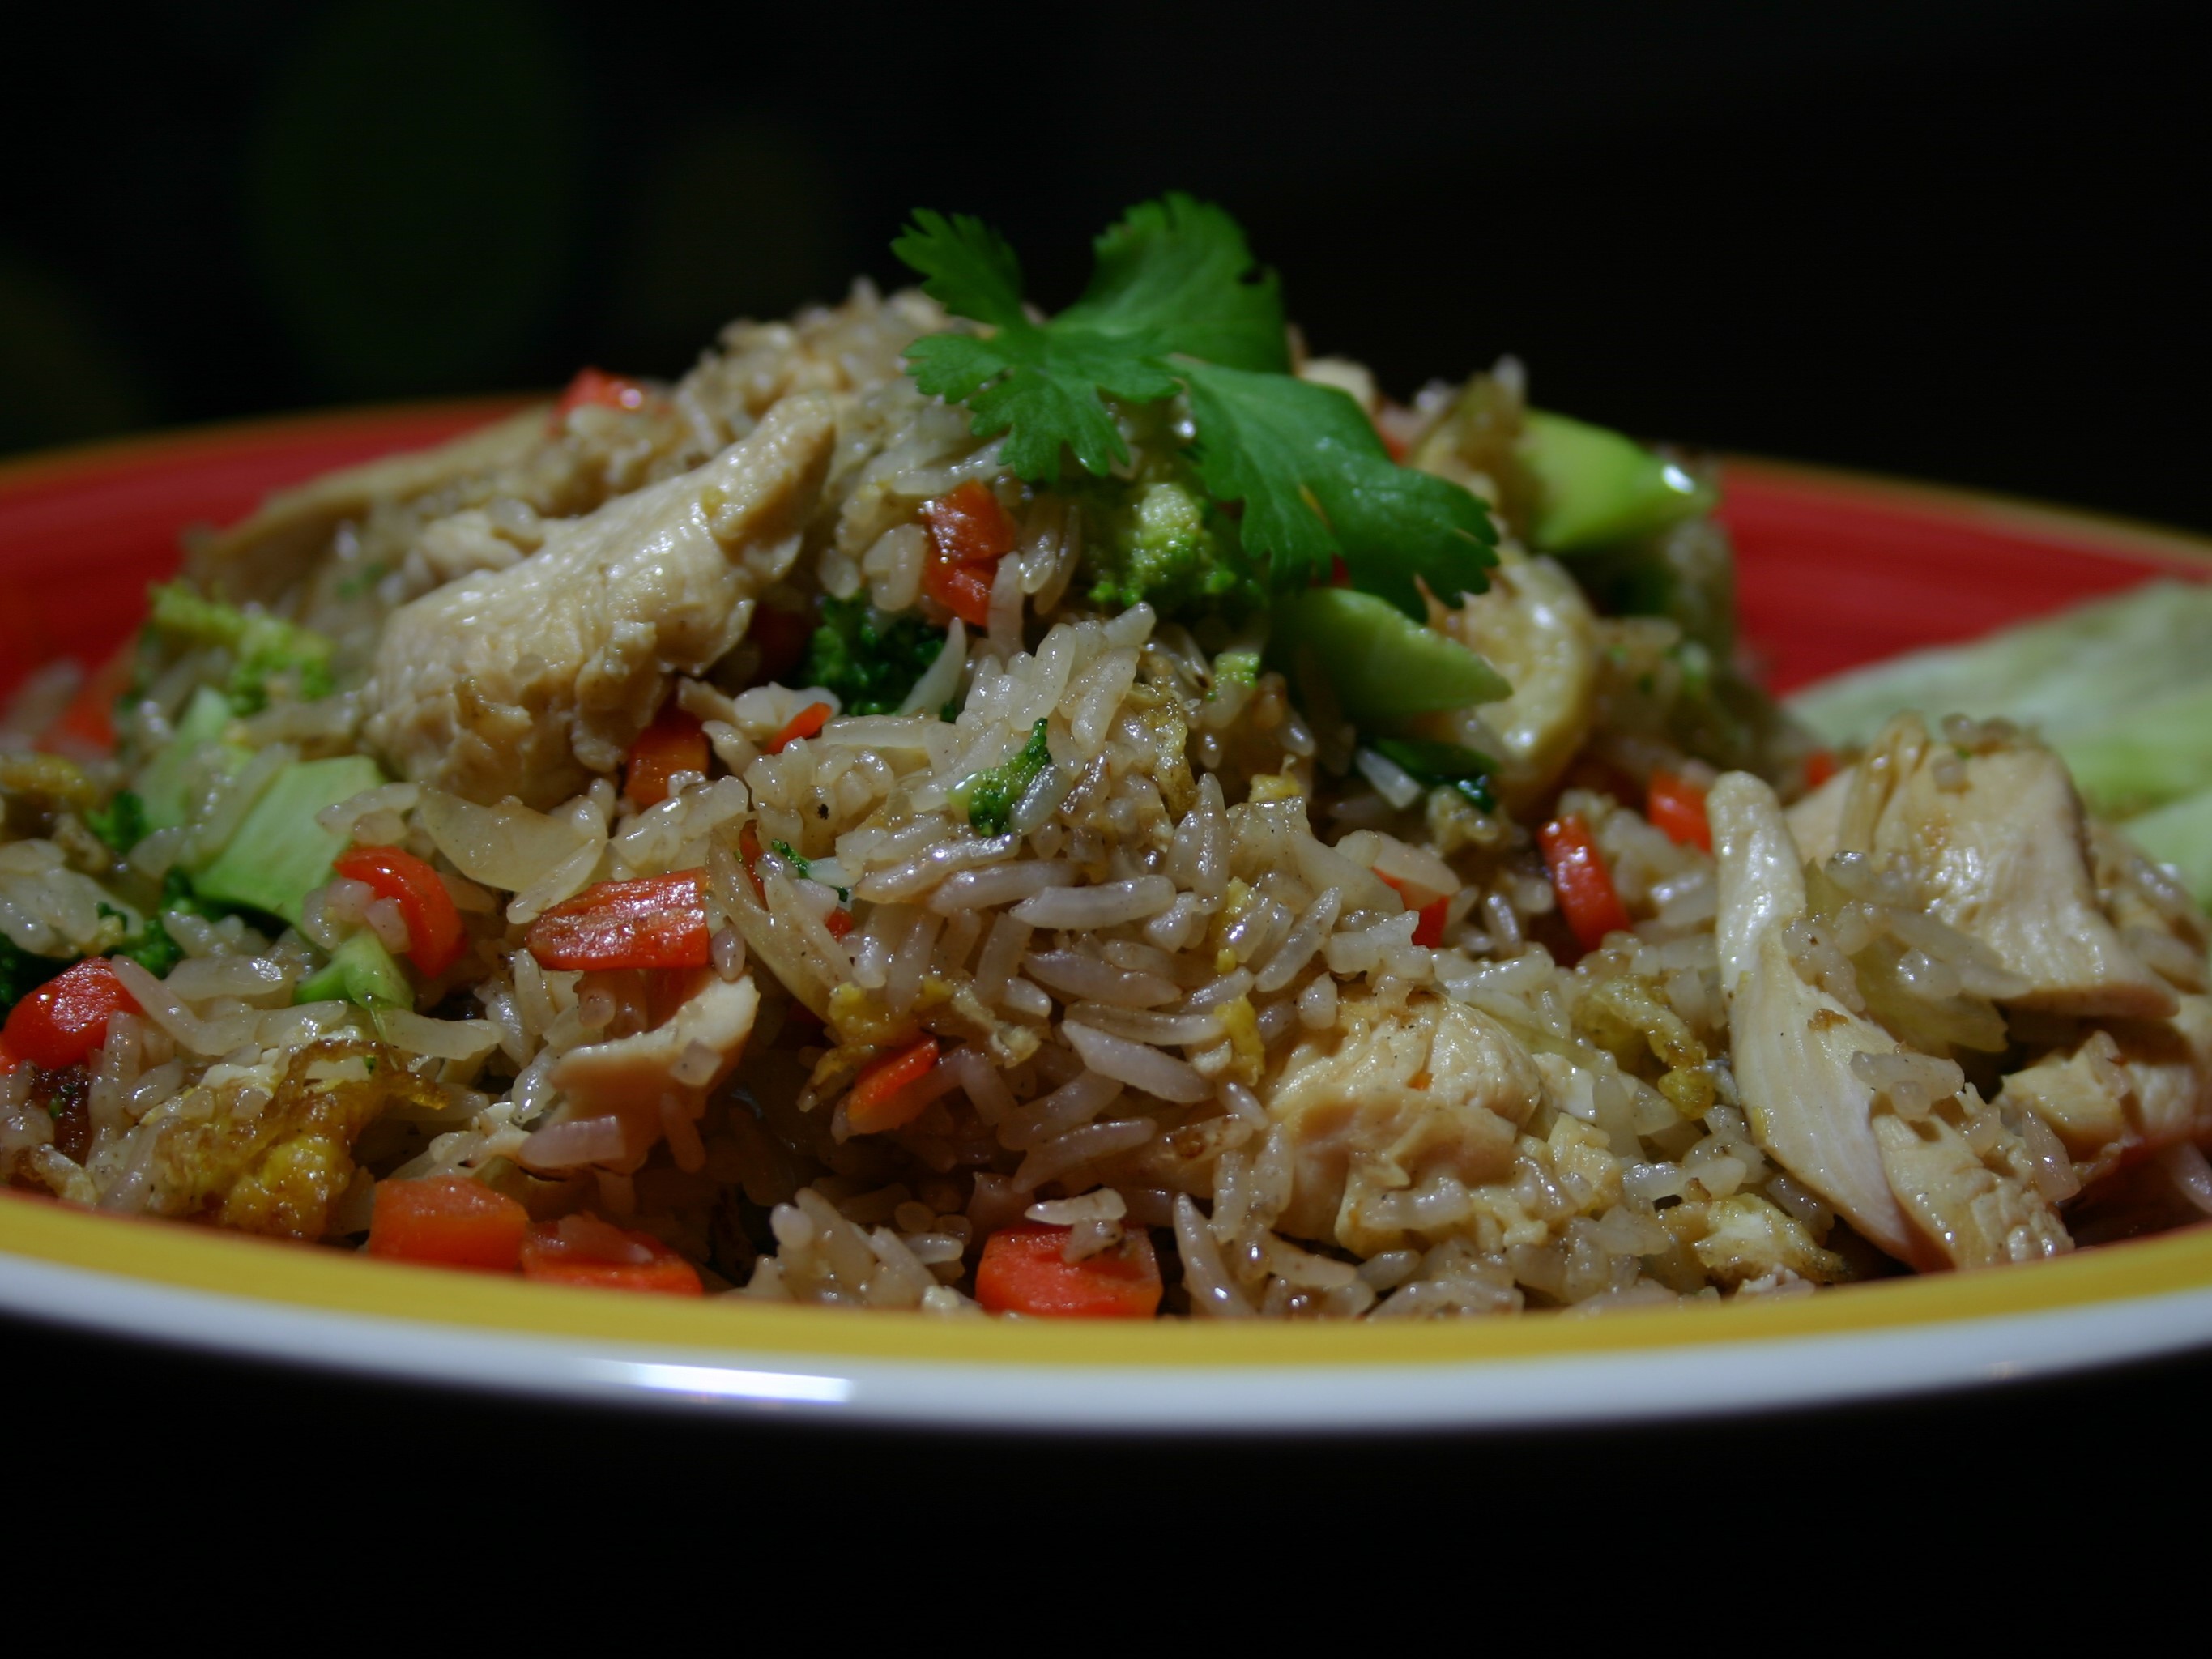 
Rice and Spice Thai Kitchen3